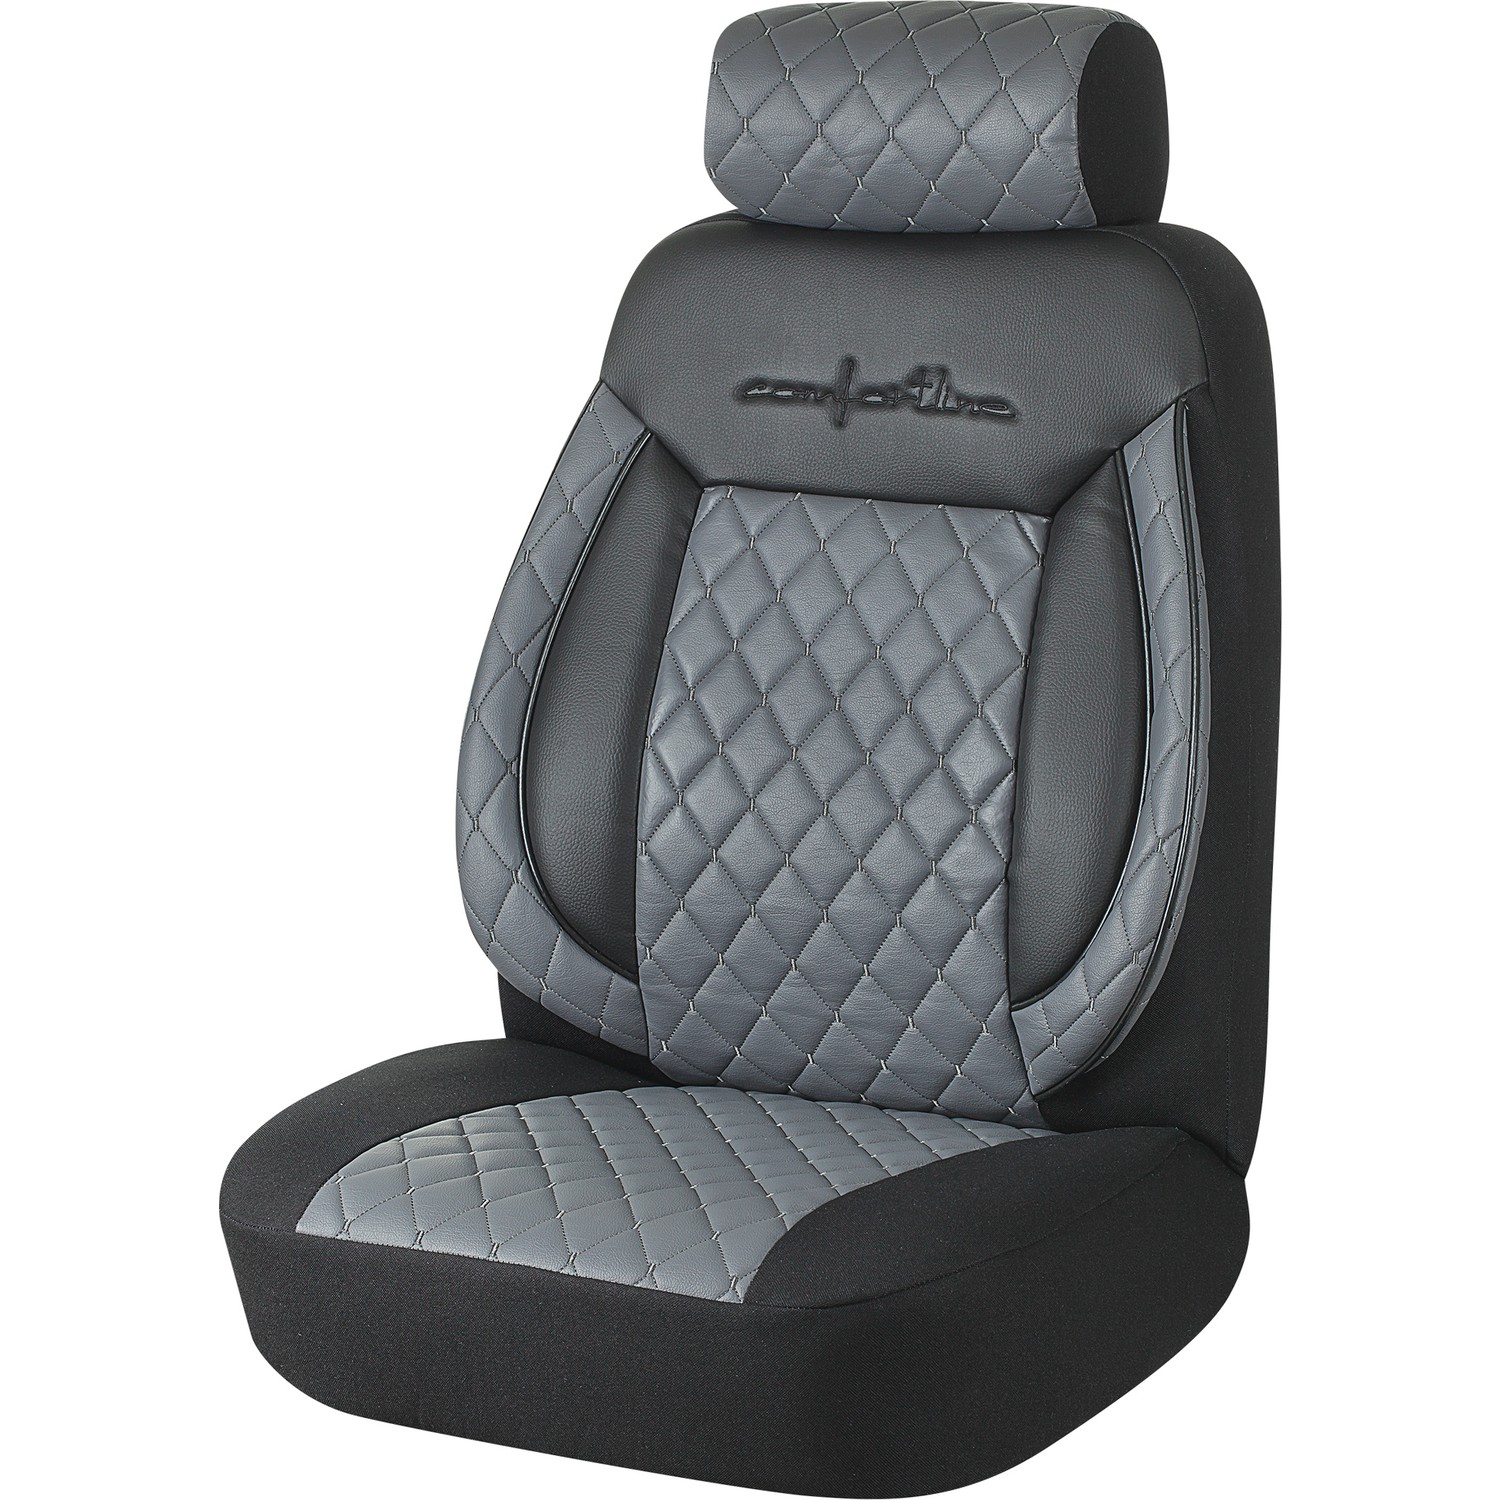 Otom Comfortline VIP Series Universal Deri Oto Koltuk Kılıfı Fiyatı